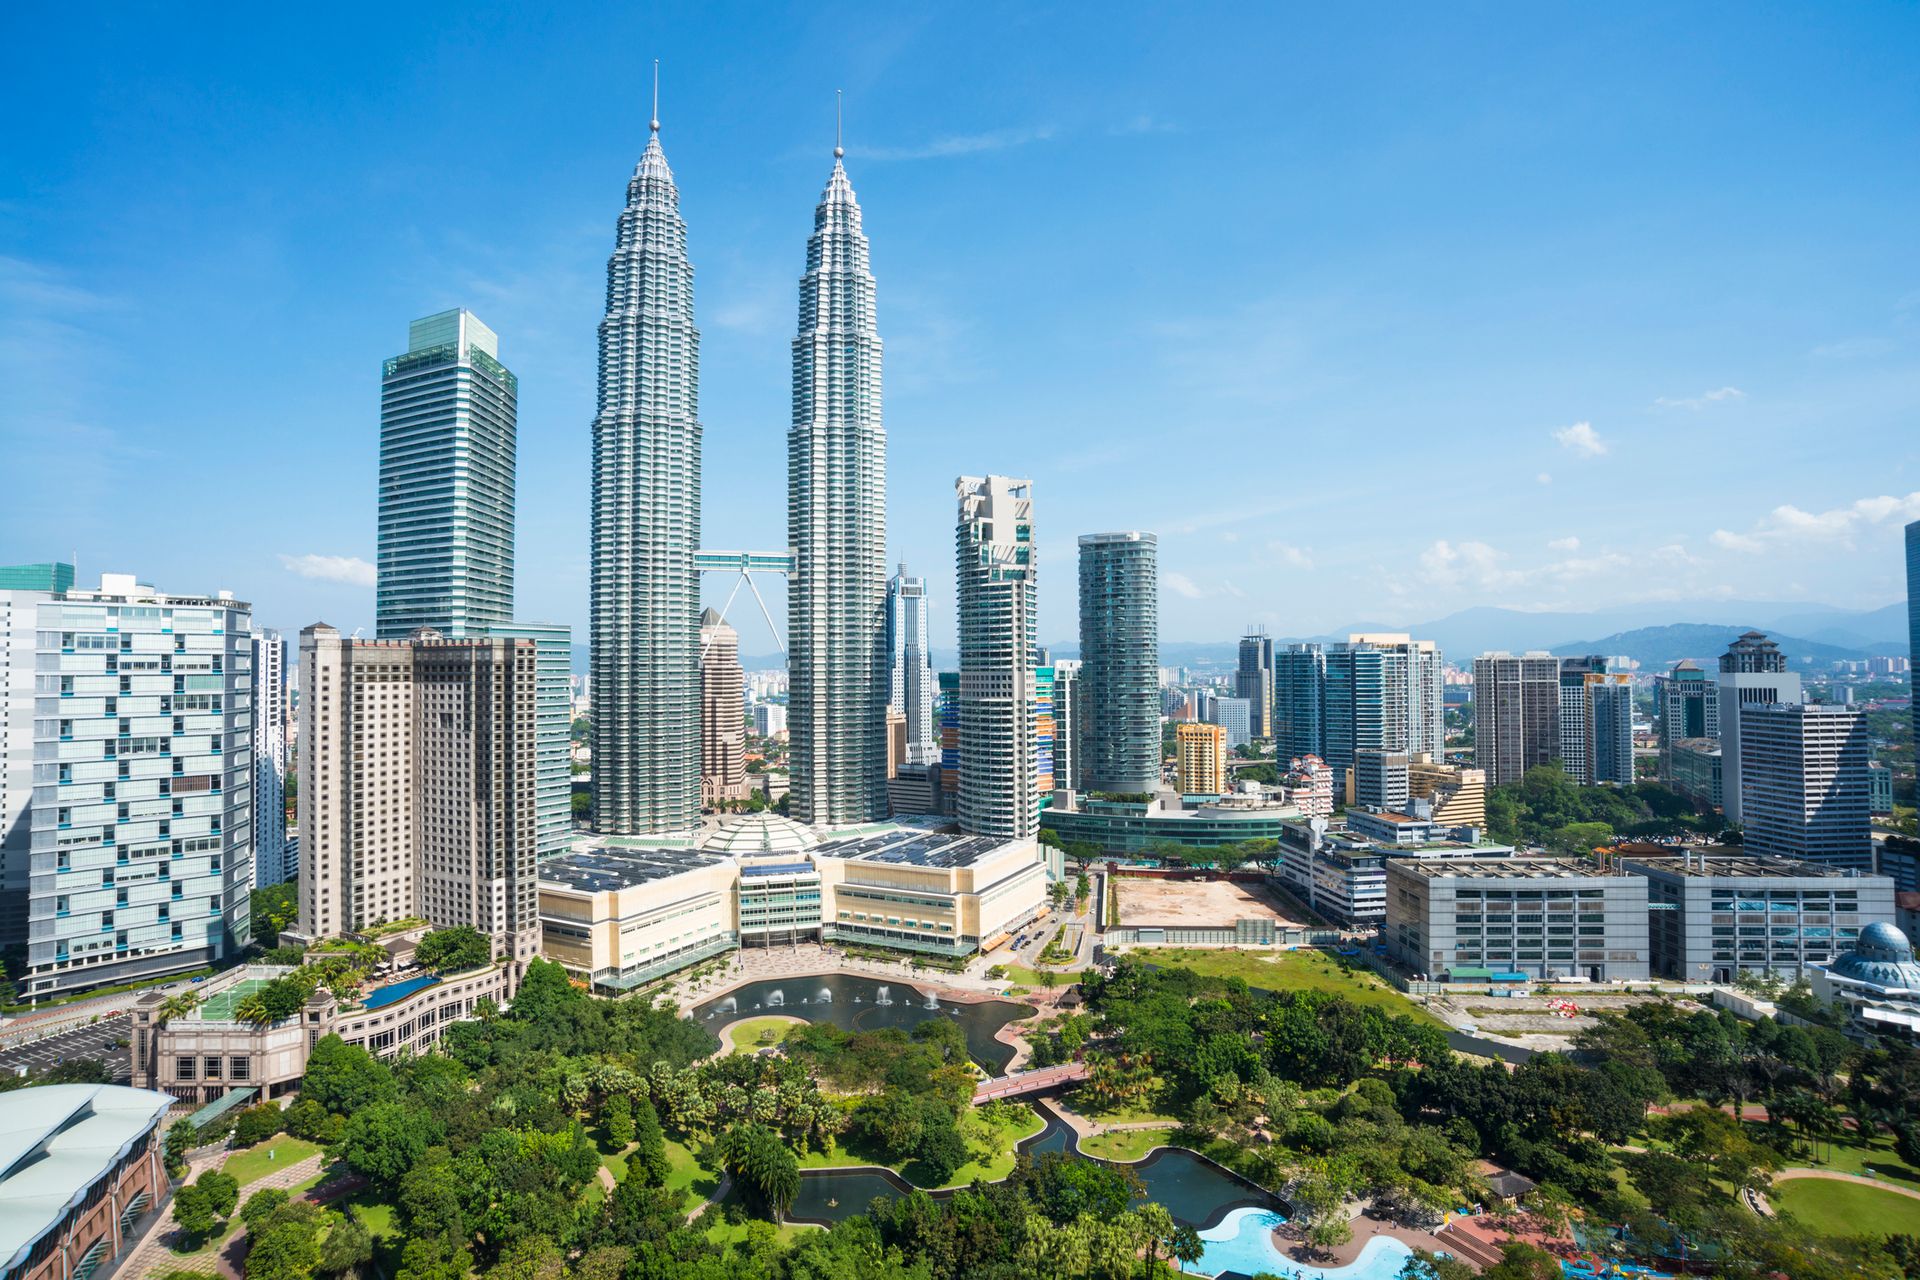 Les tours jumelles Petronas, Kuala Lumpur - Malaisie ©iStock